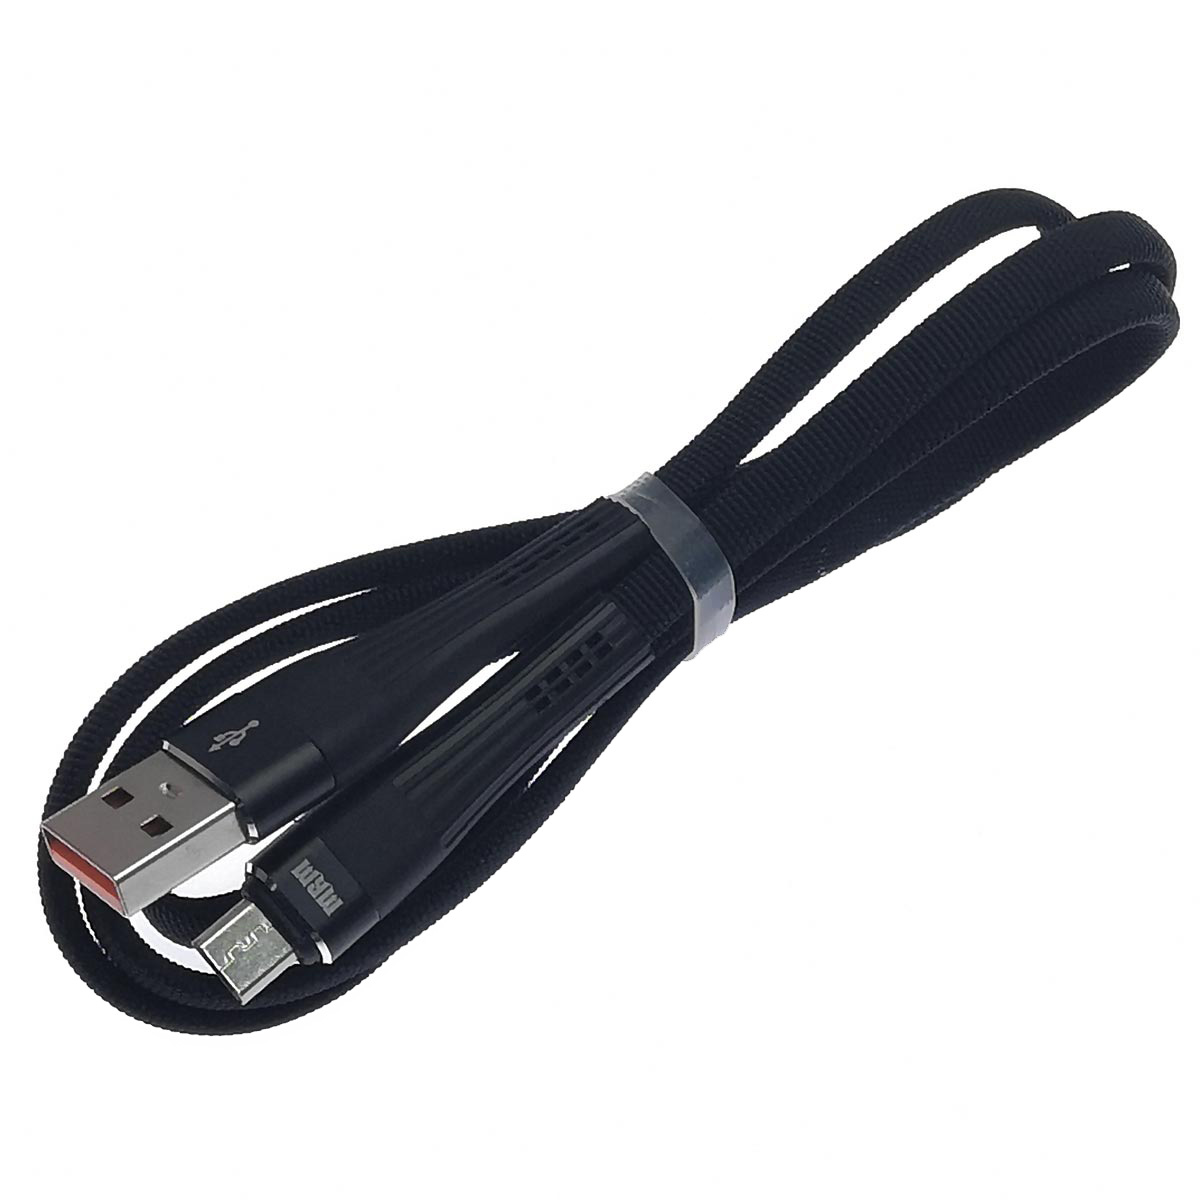 USB Дата кабель MRM MR-30m, Micro USB, нейлон, плоский, длина 1 метр, 3.1 A, цвет черный